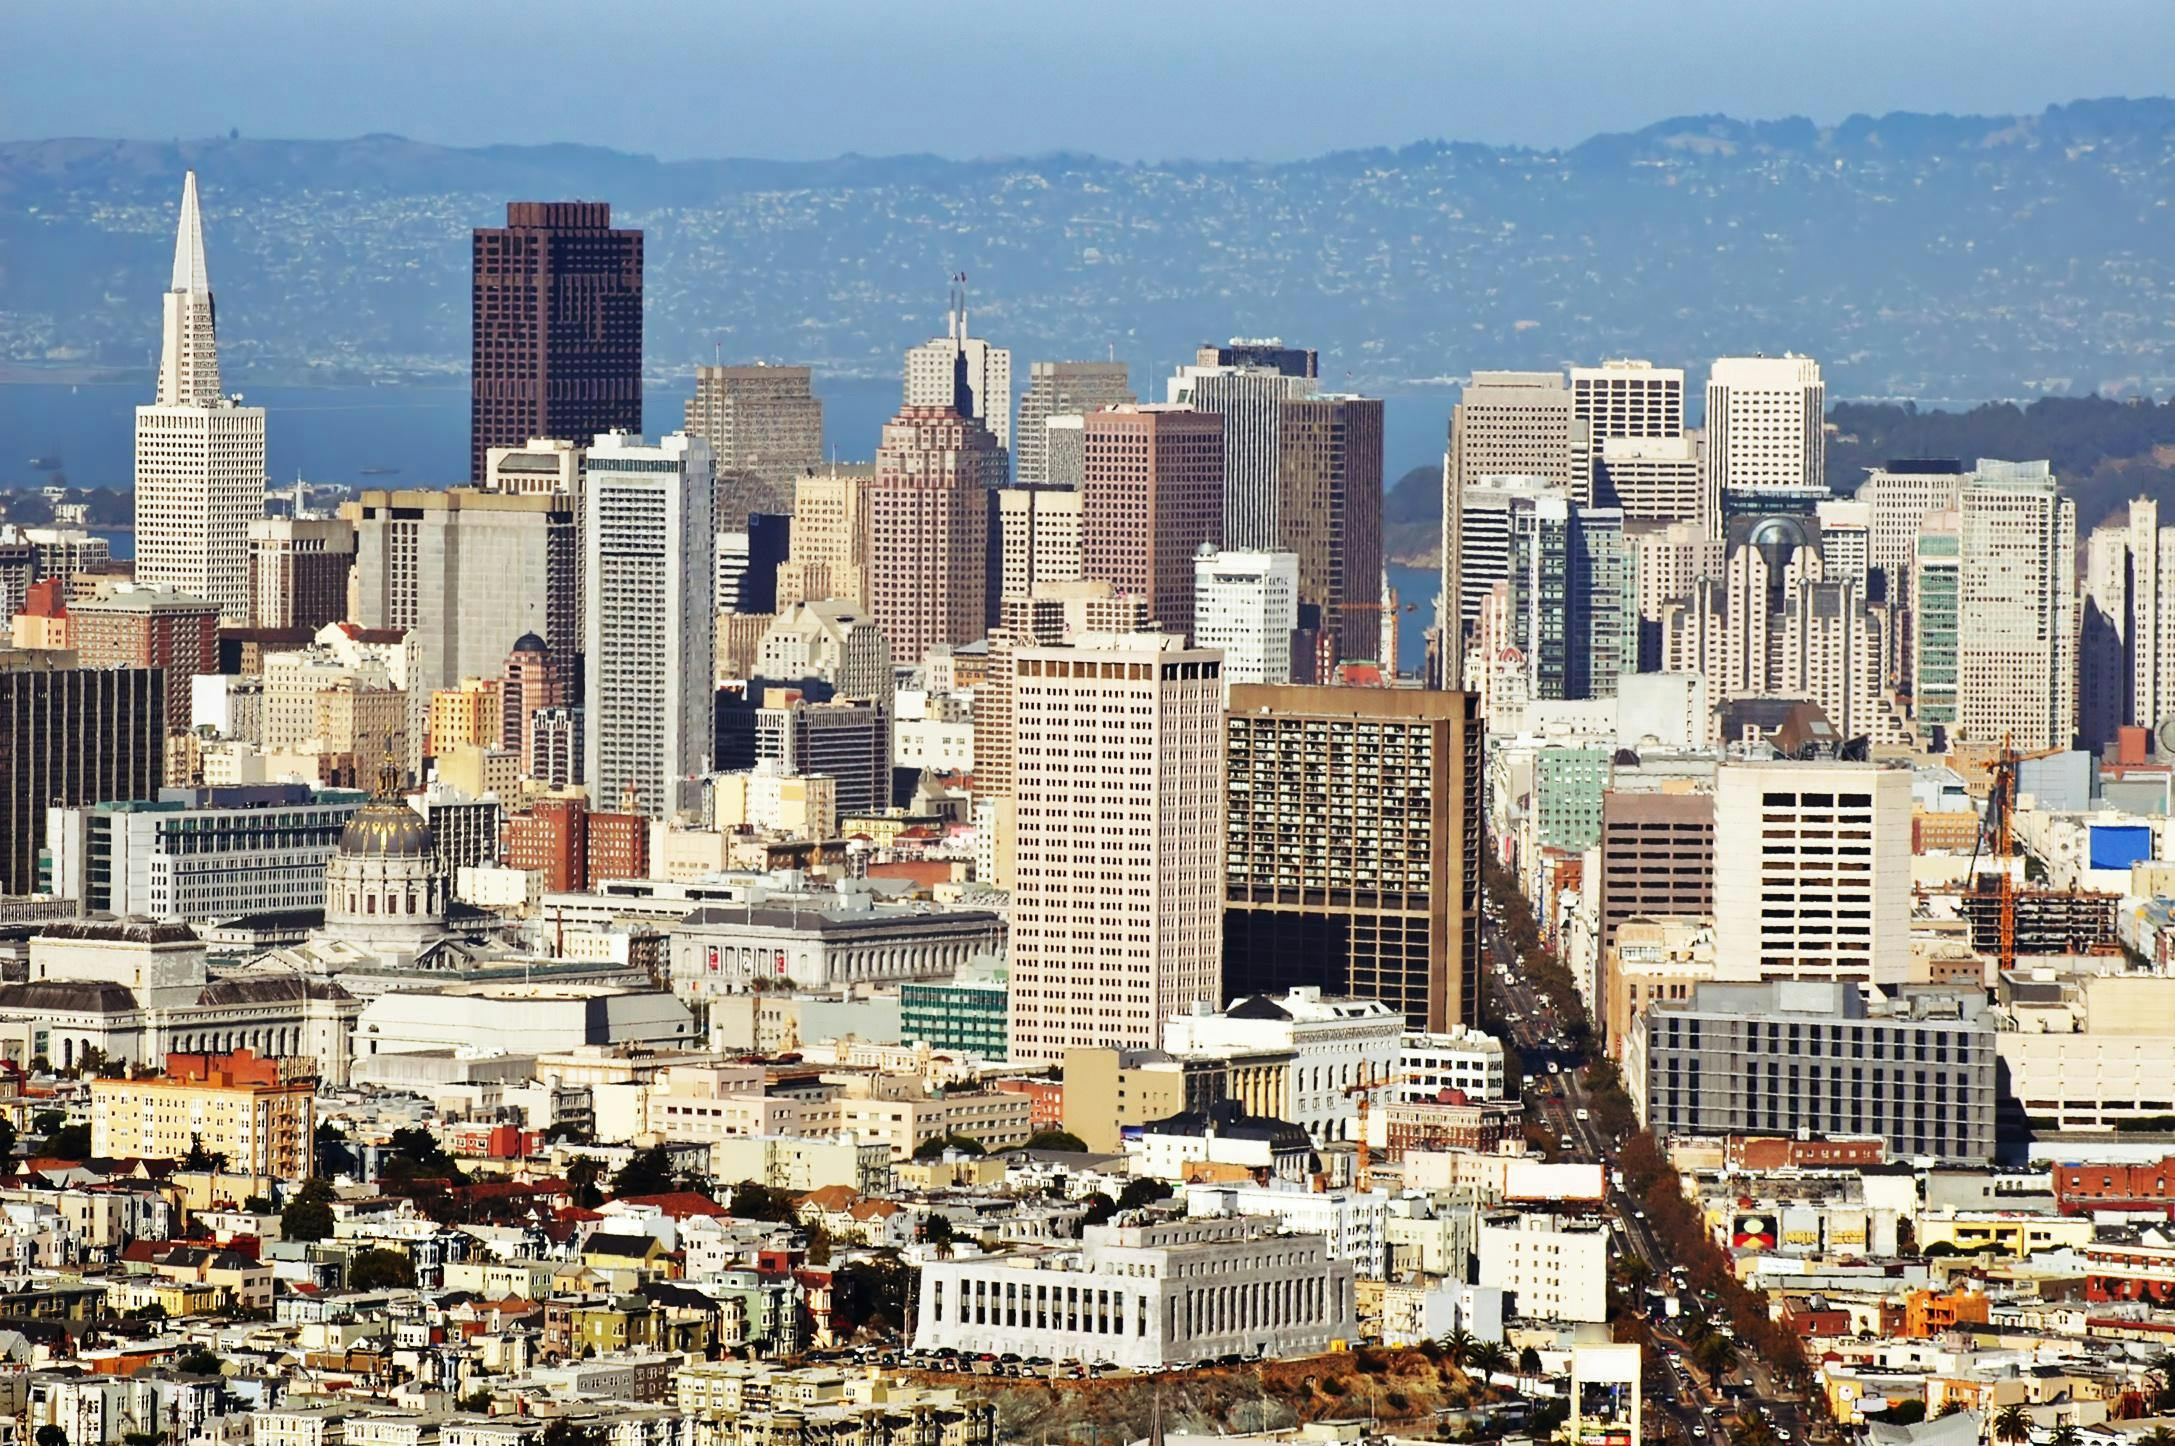 San Francisco Grand City bus tour with 4-hour bike rental